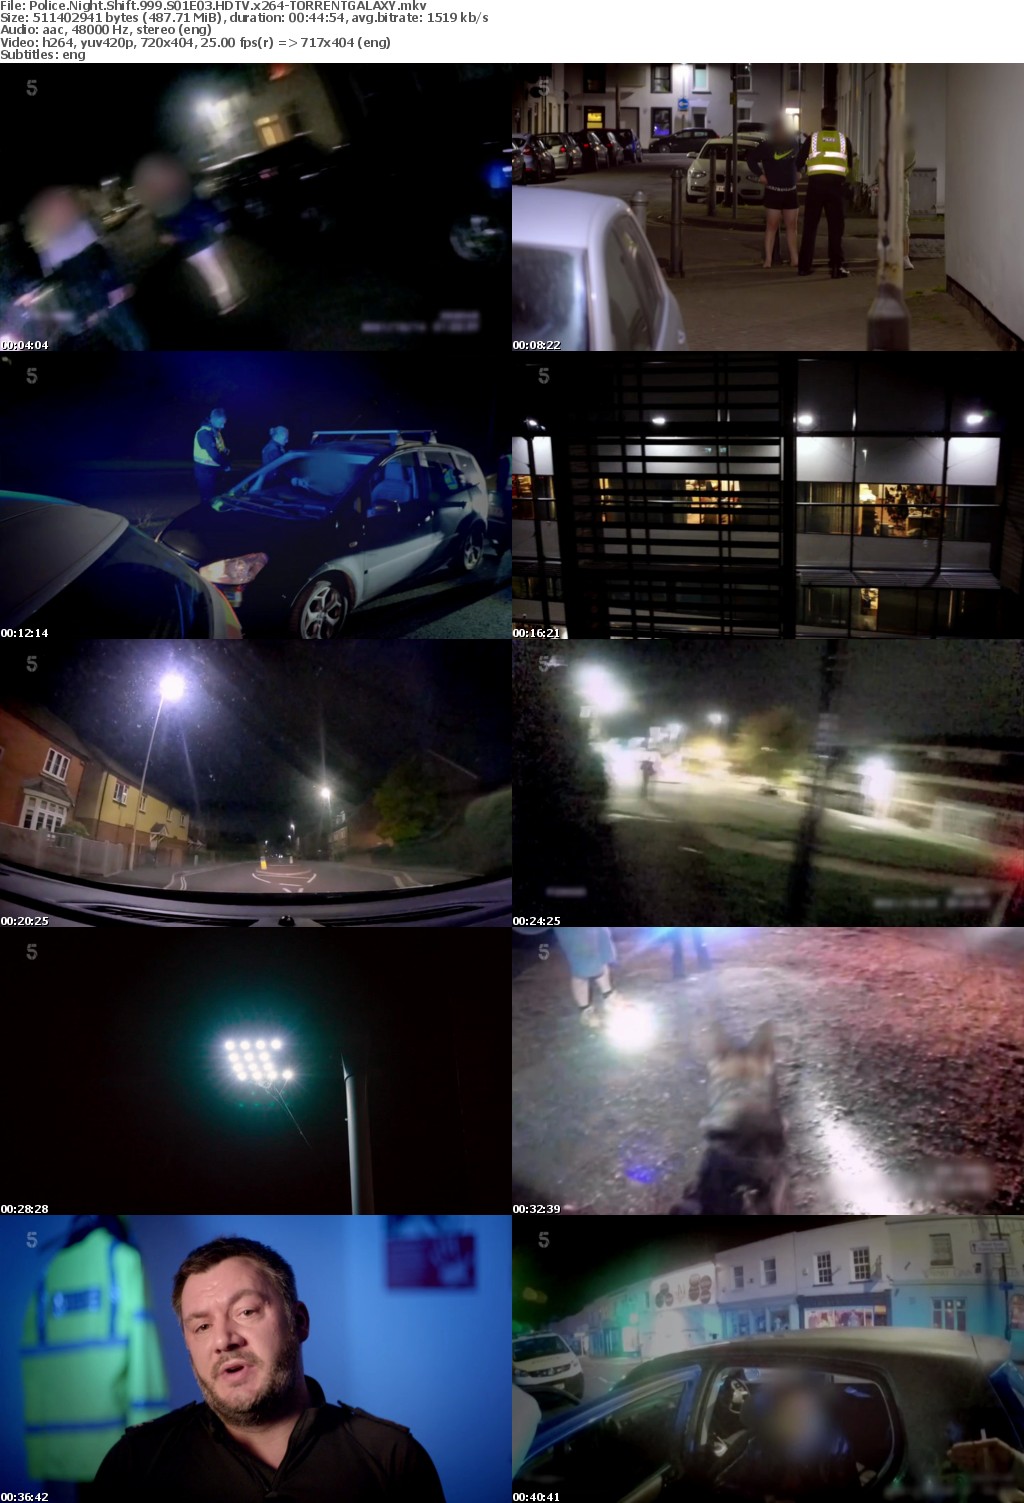 Police Night Shift 999 S01E03 HDTV x264-GALAXY